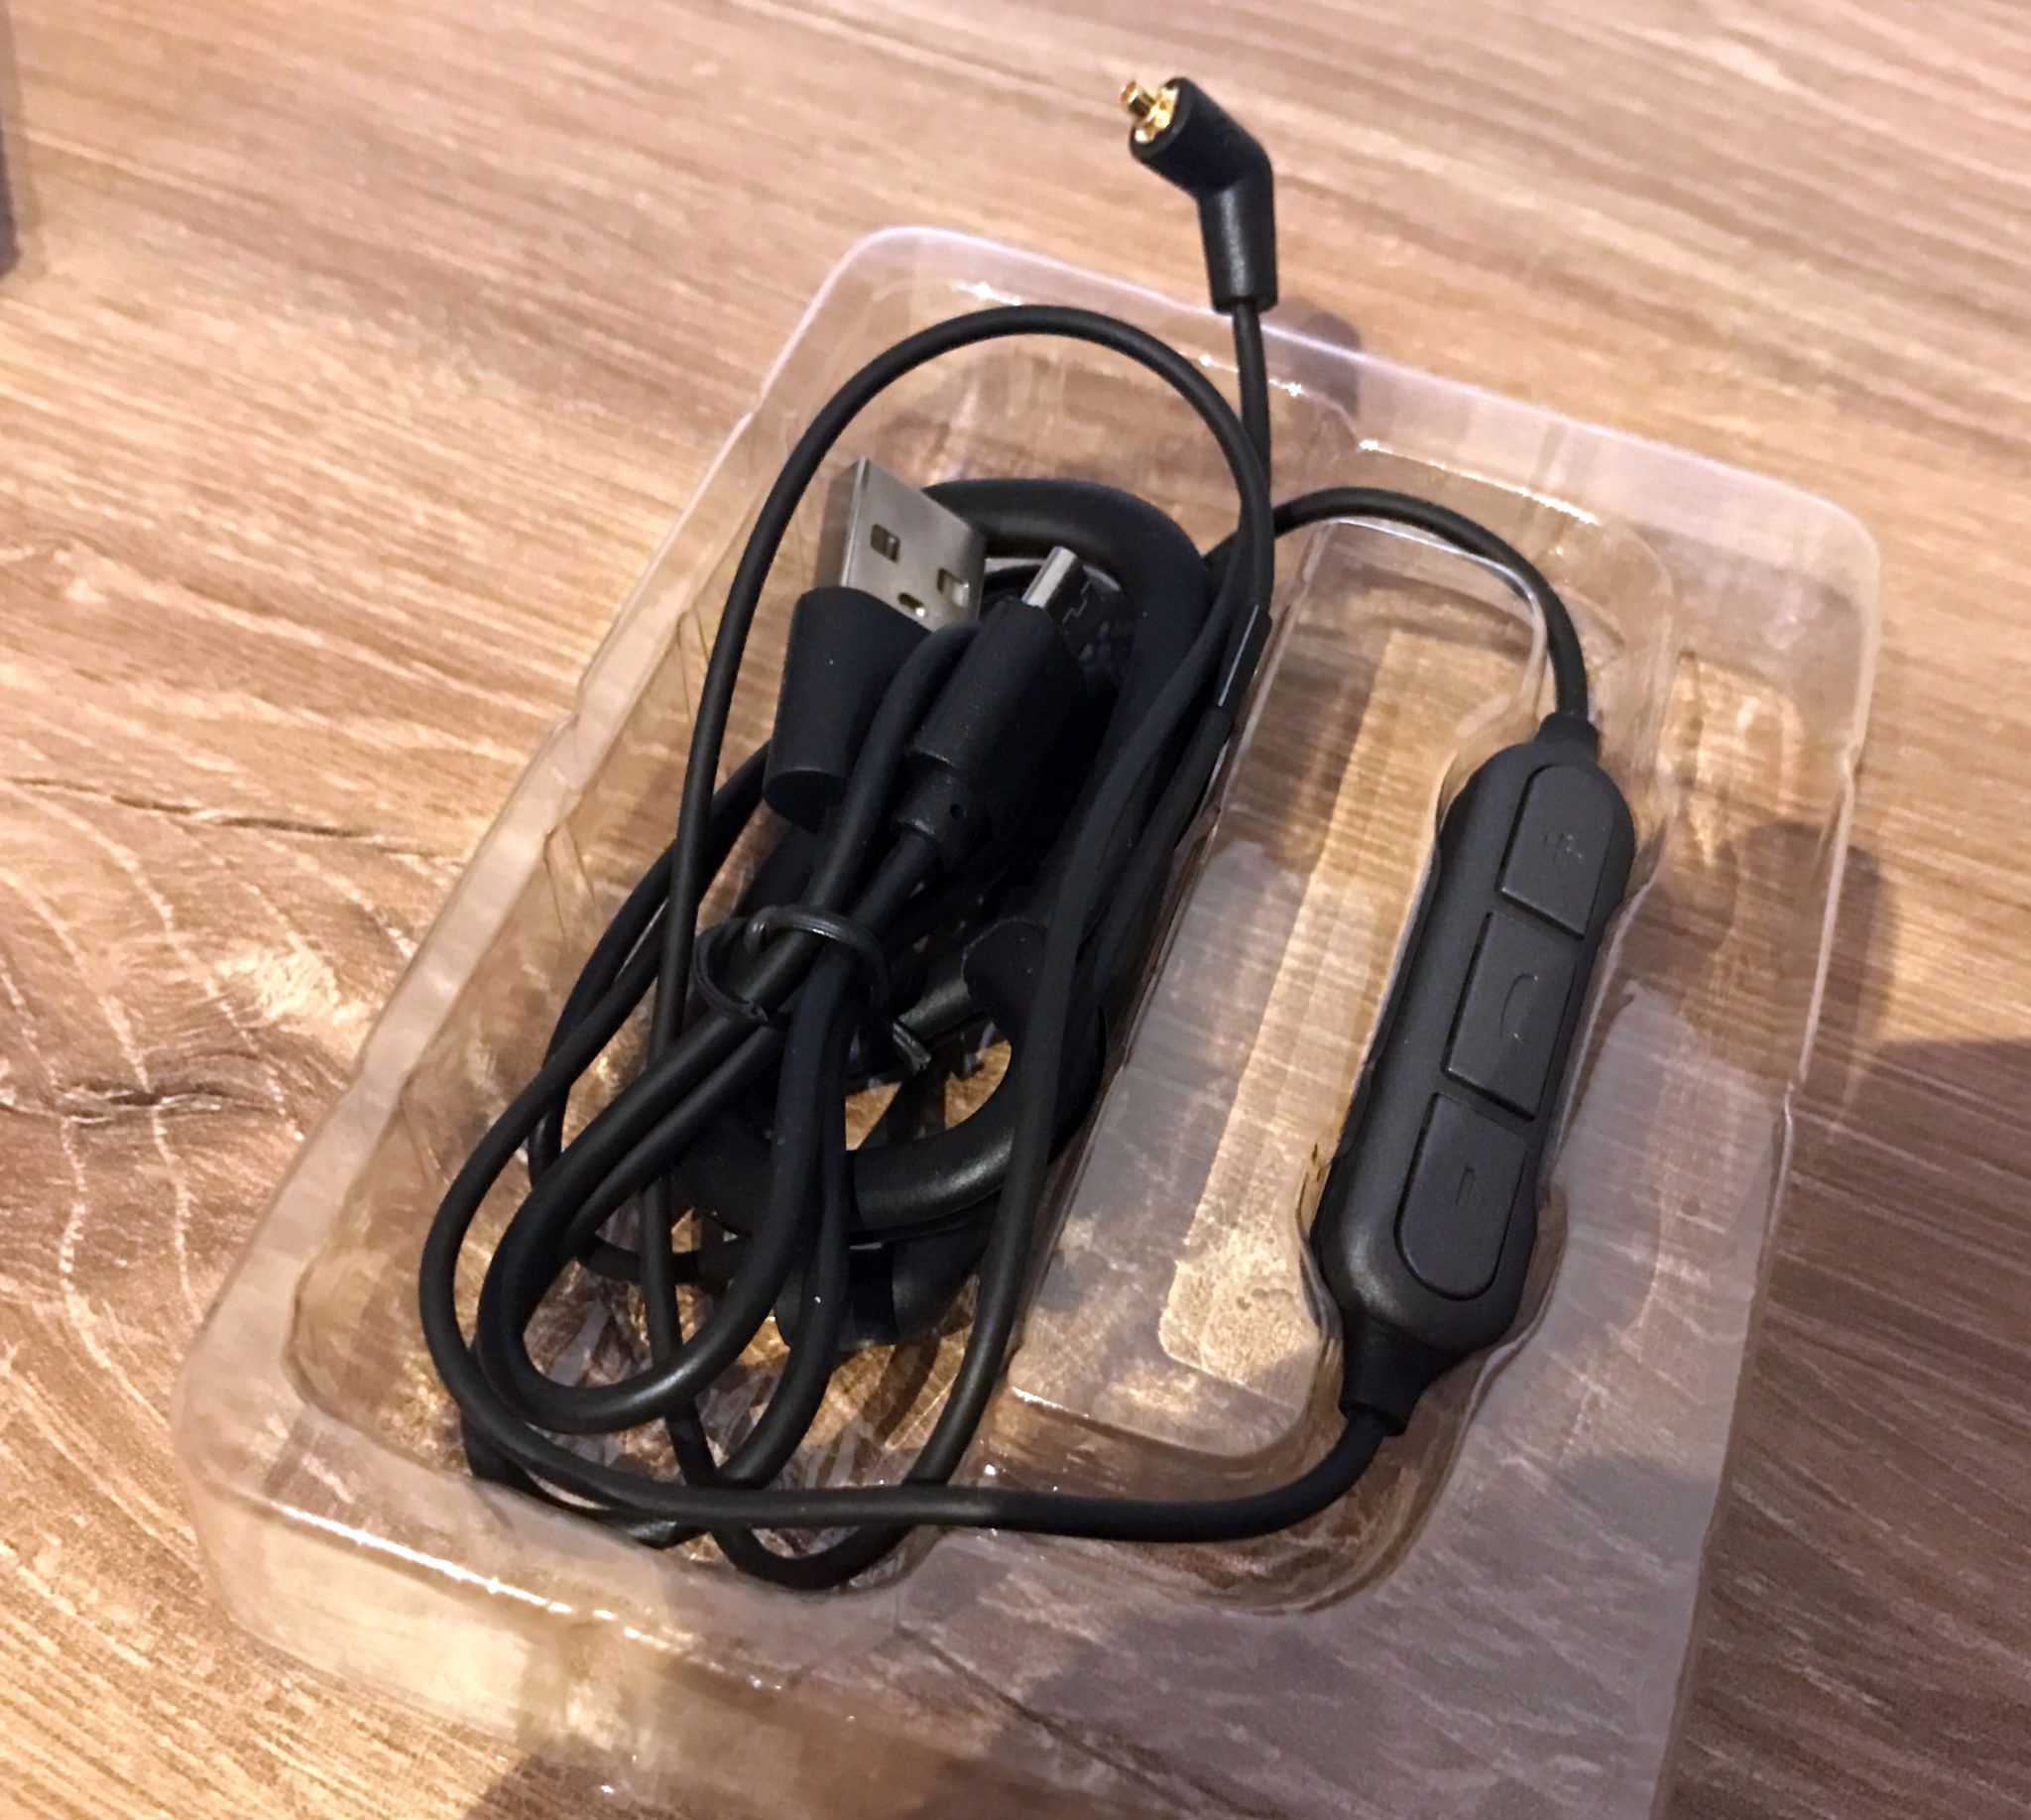 Verpackungsinhalt des LEAR BTC-01 Bluetooth Cables